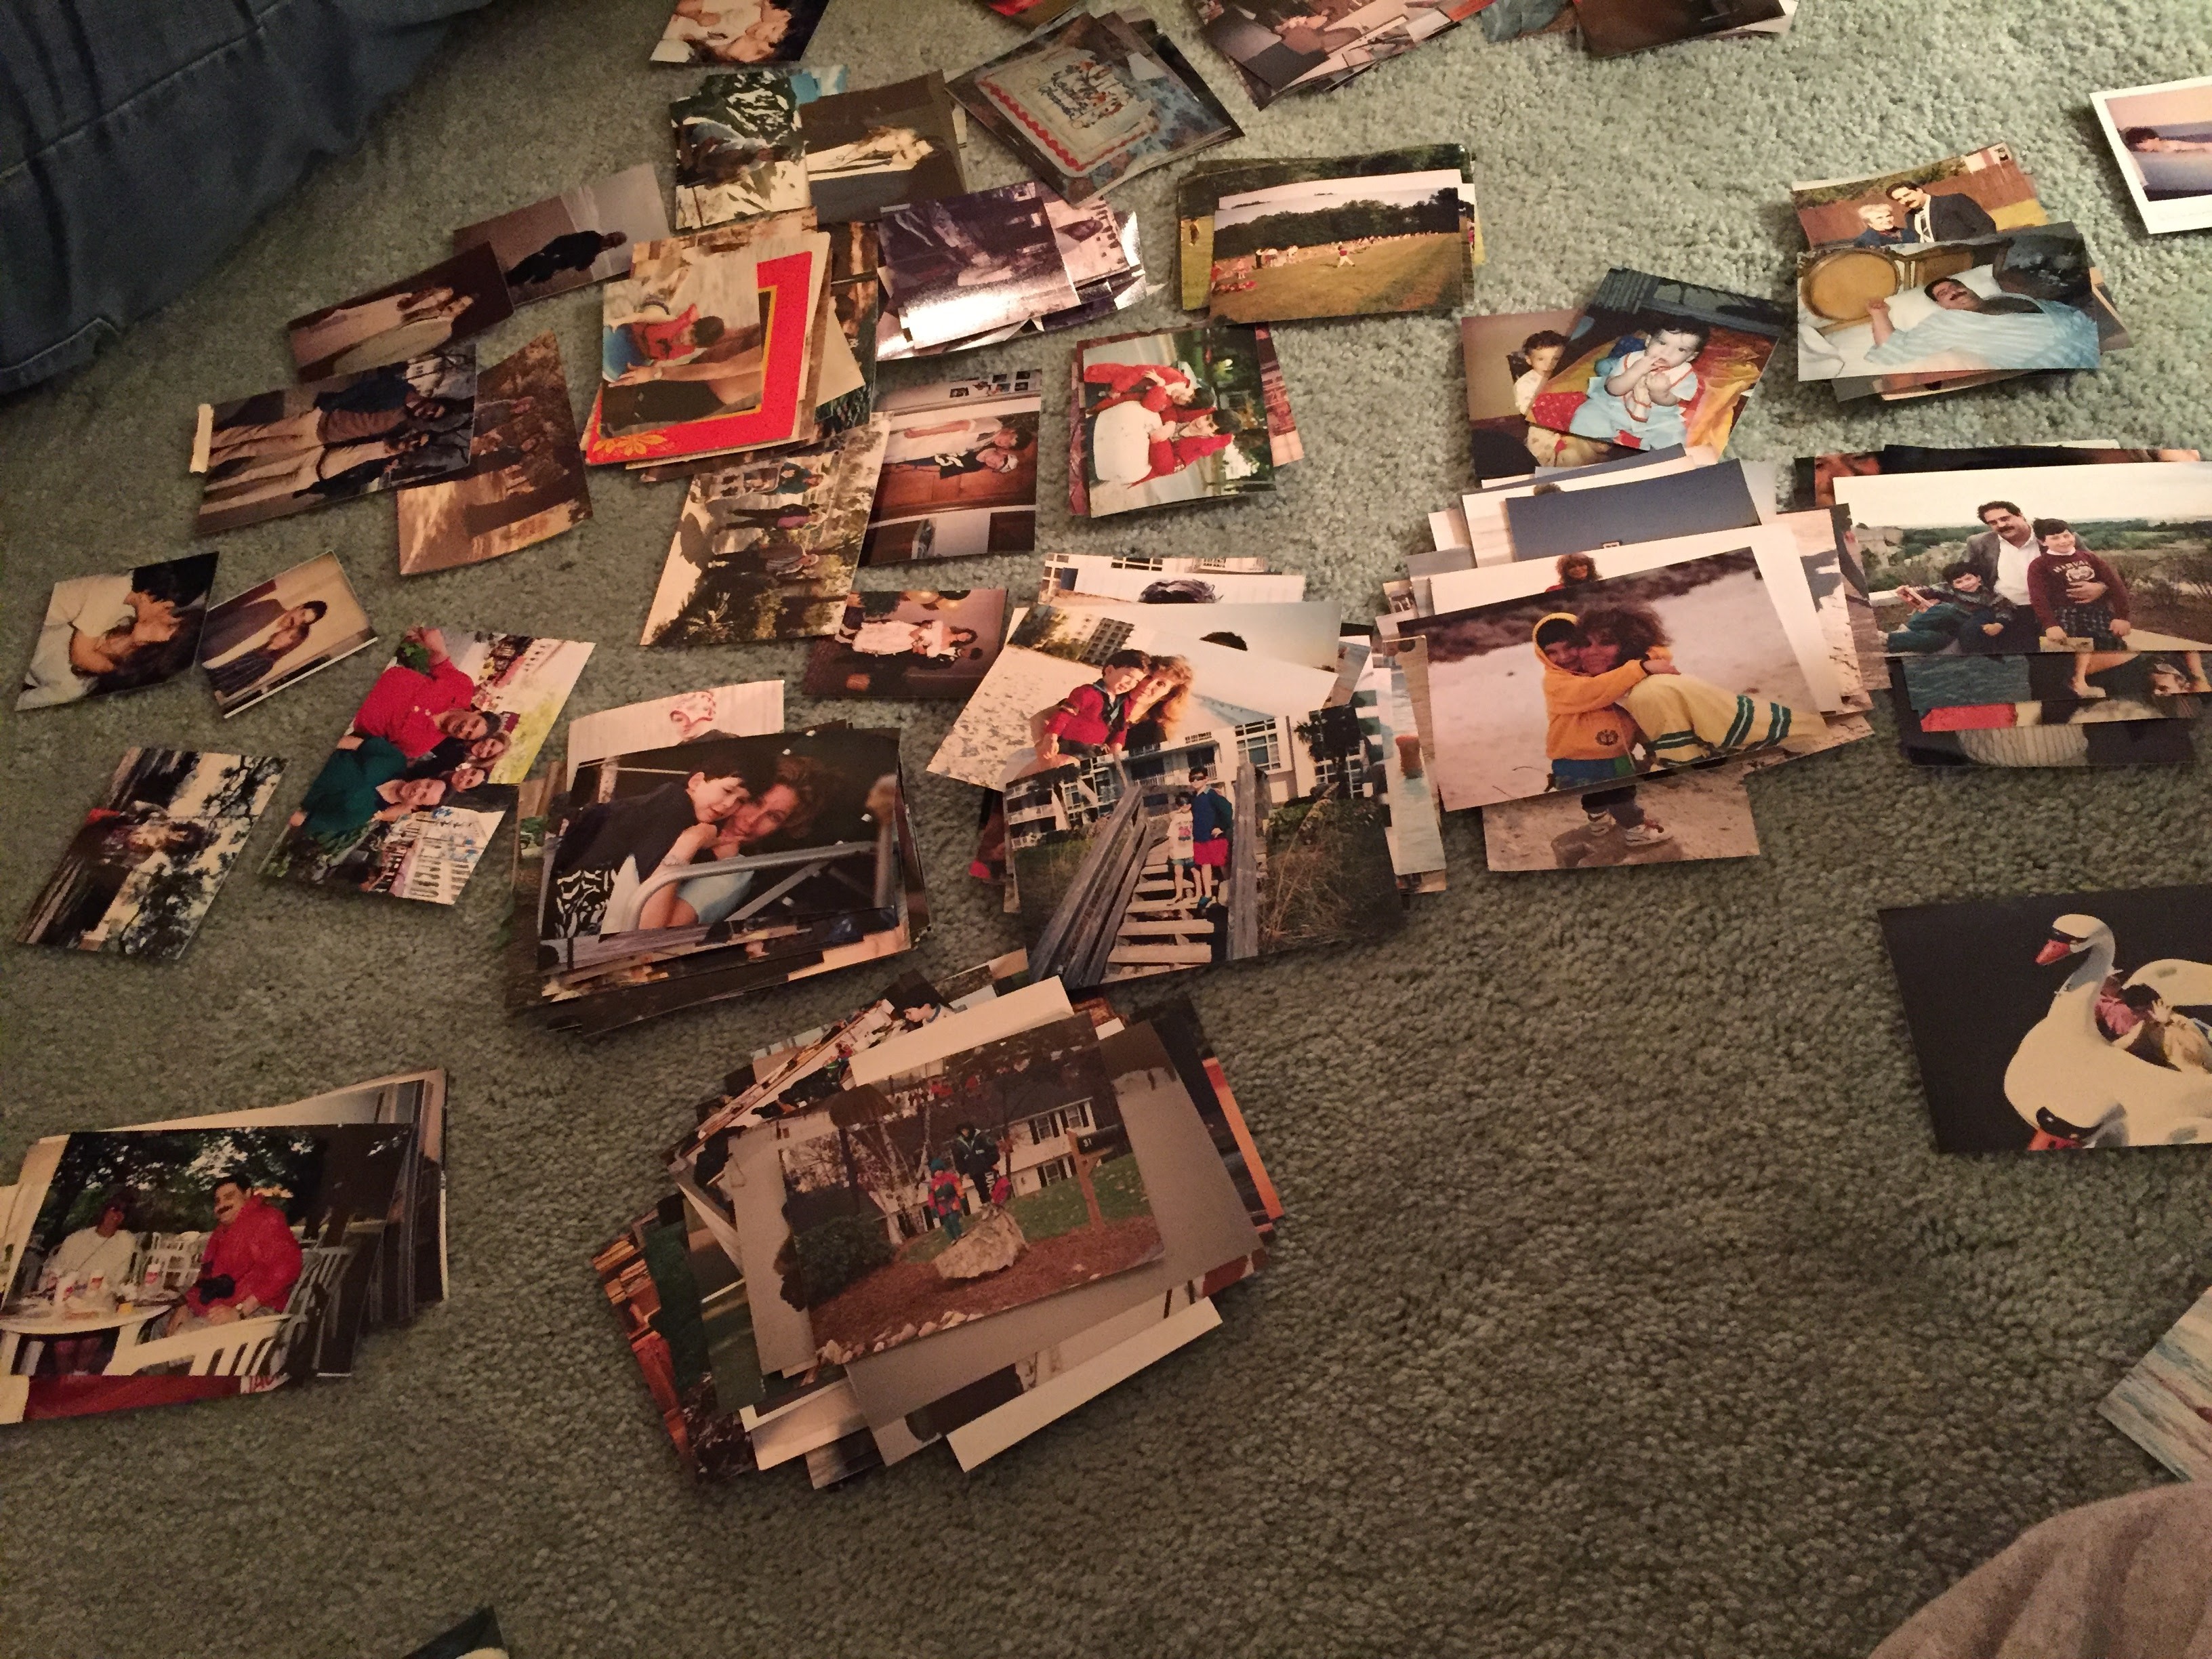 Photos on the floor in piles